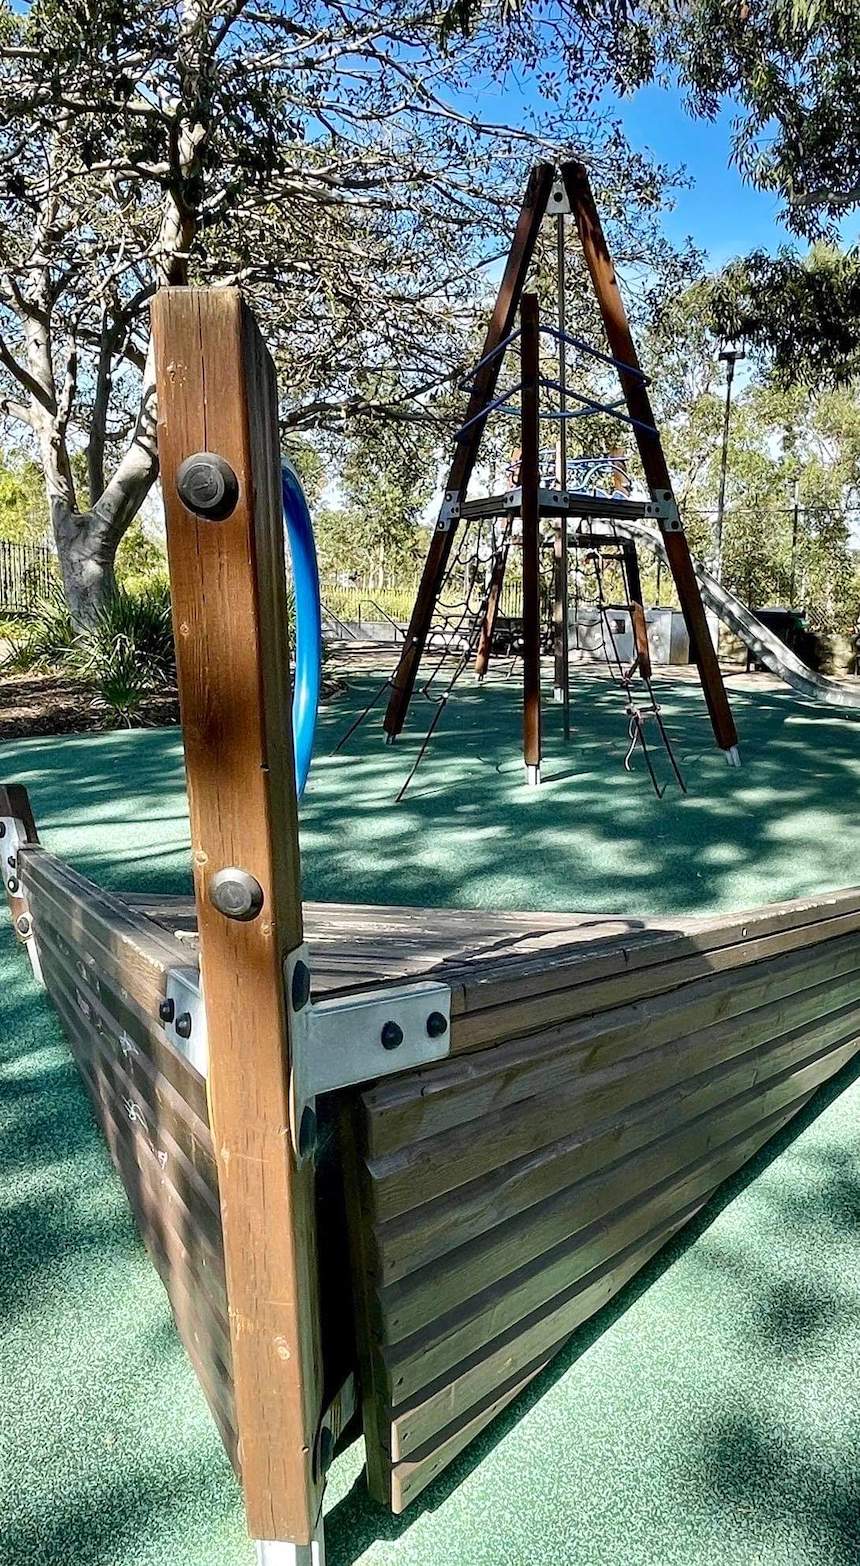 Free school holiday outdoor adventures: Playground at Clyne Reserve near the Barangaroo Reserve park Sydney.